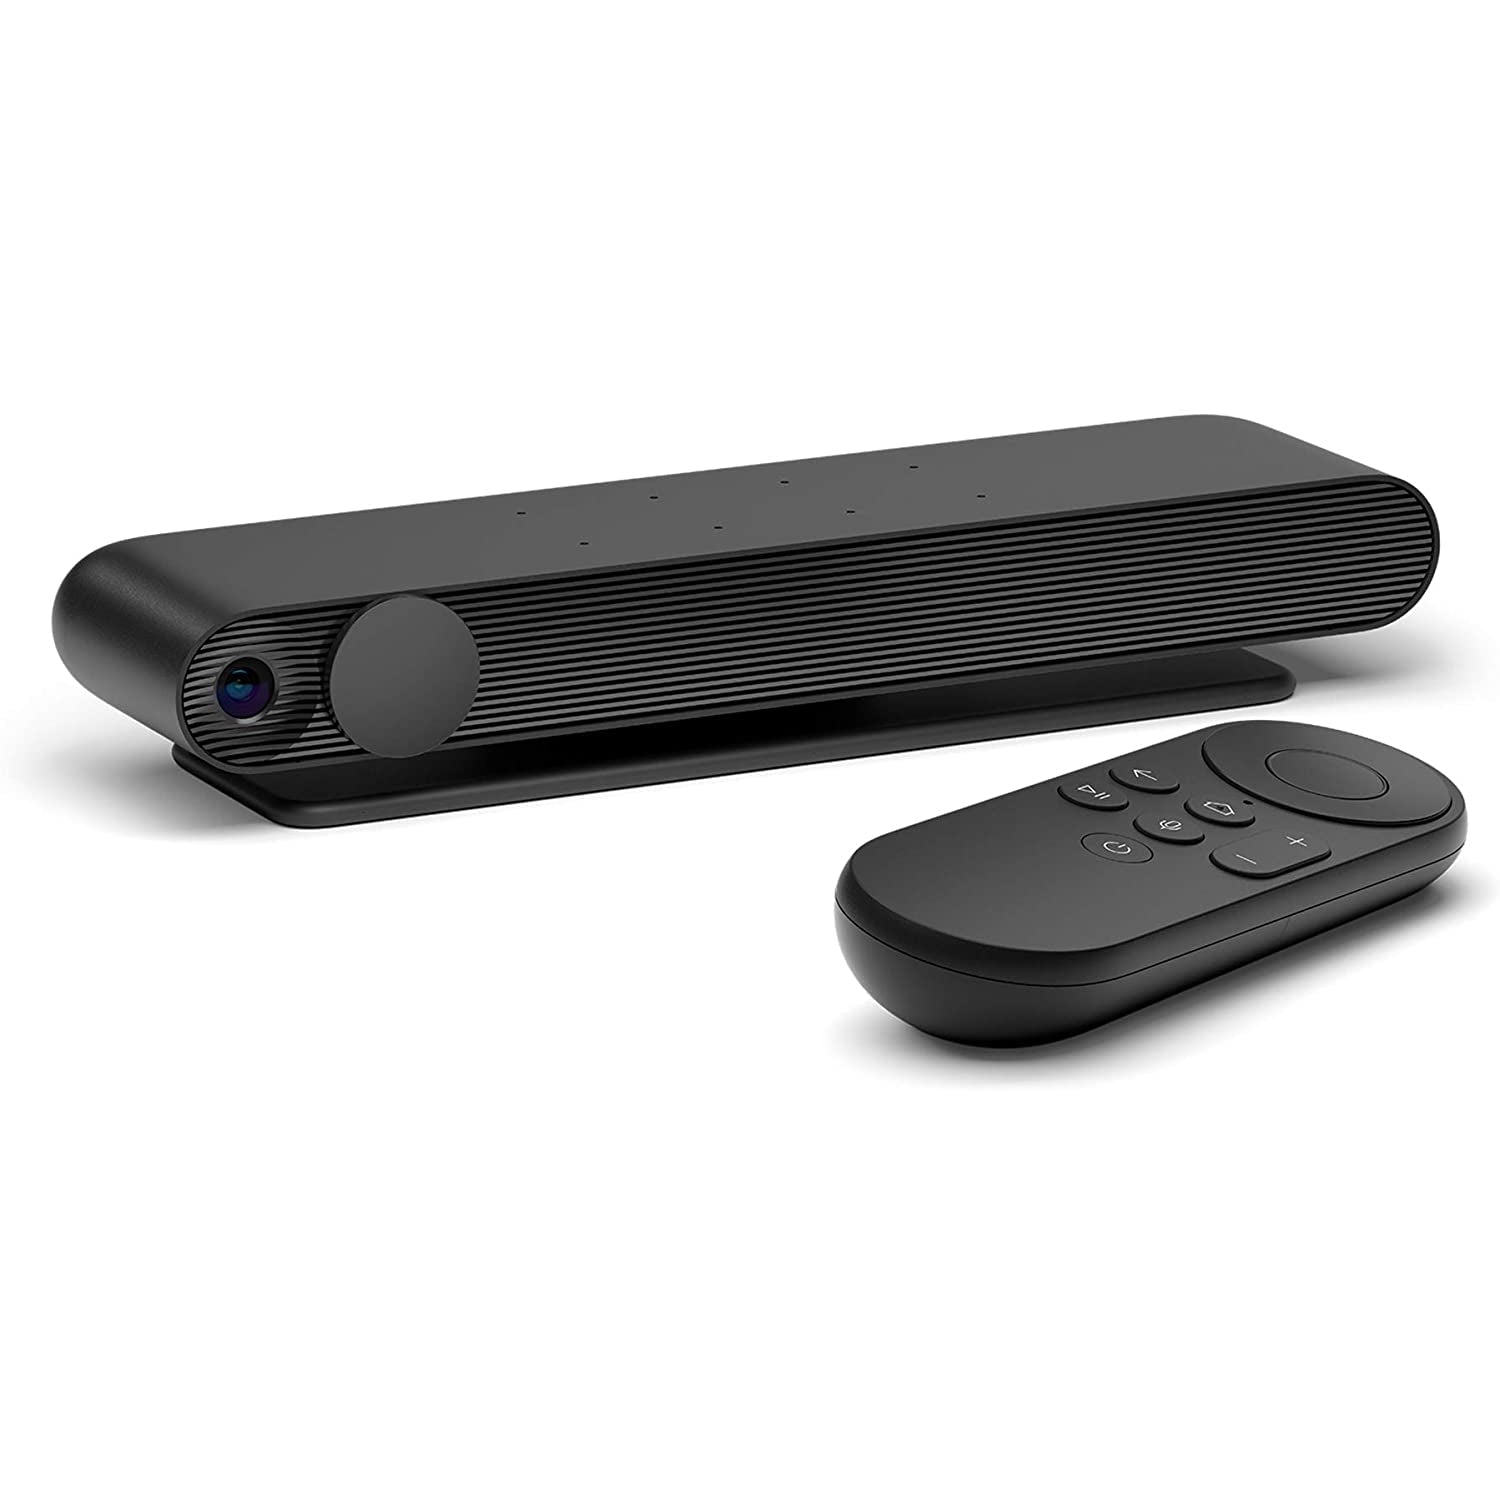 Portal TV from Facebook Smart Video Calling Camera - Black - New